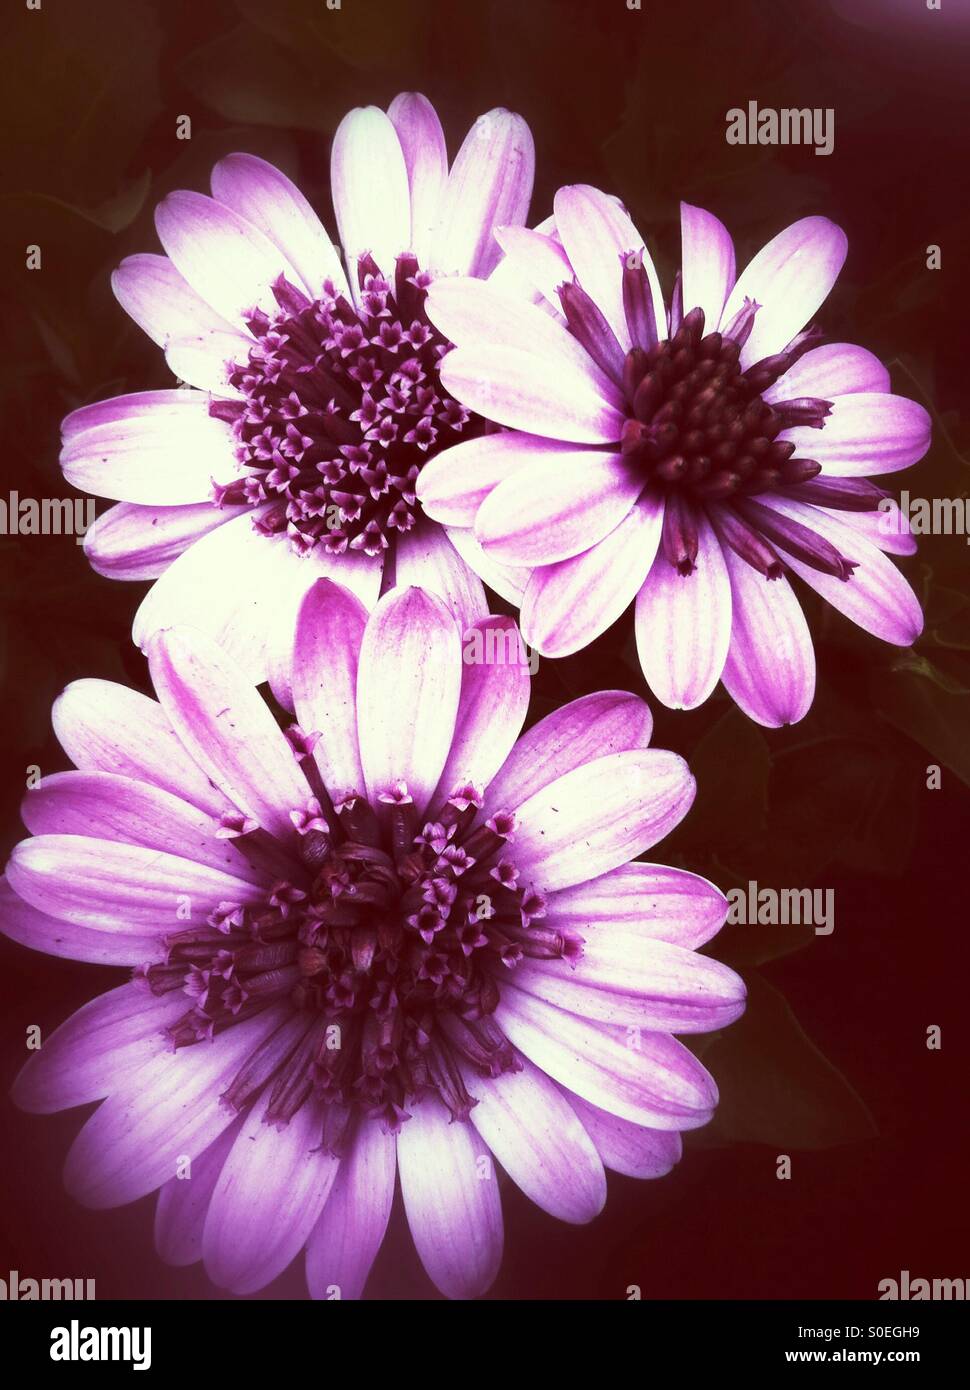 Violet daisy flowers Stock Photo